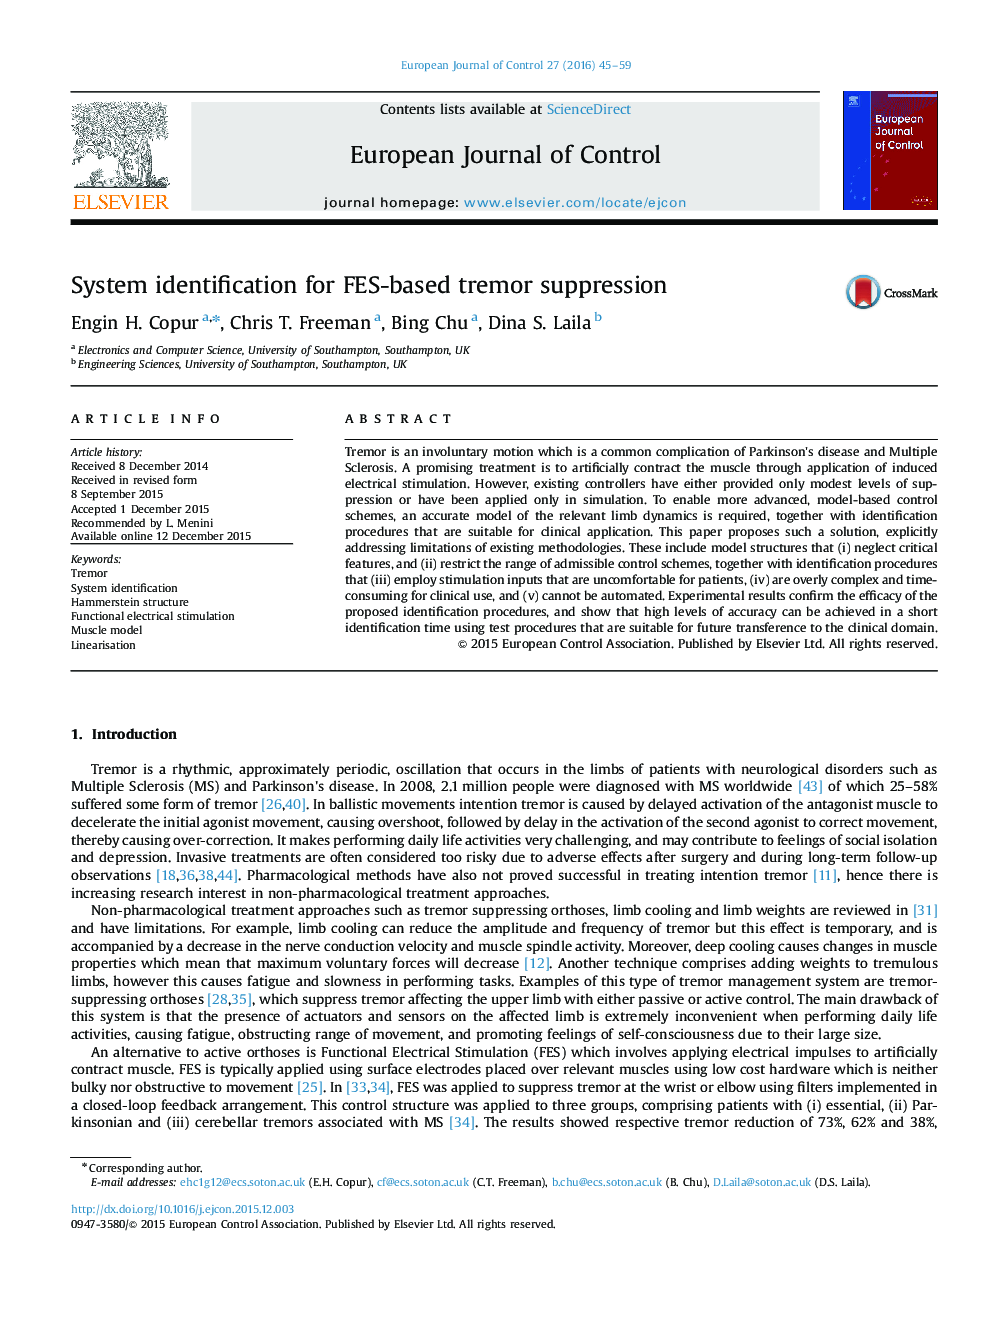 System identification for FES-based tremor suppression